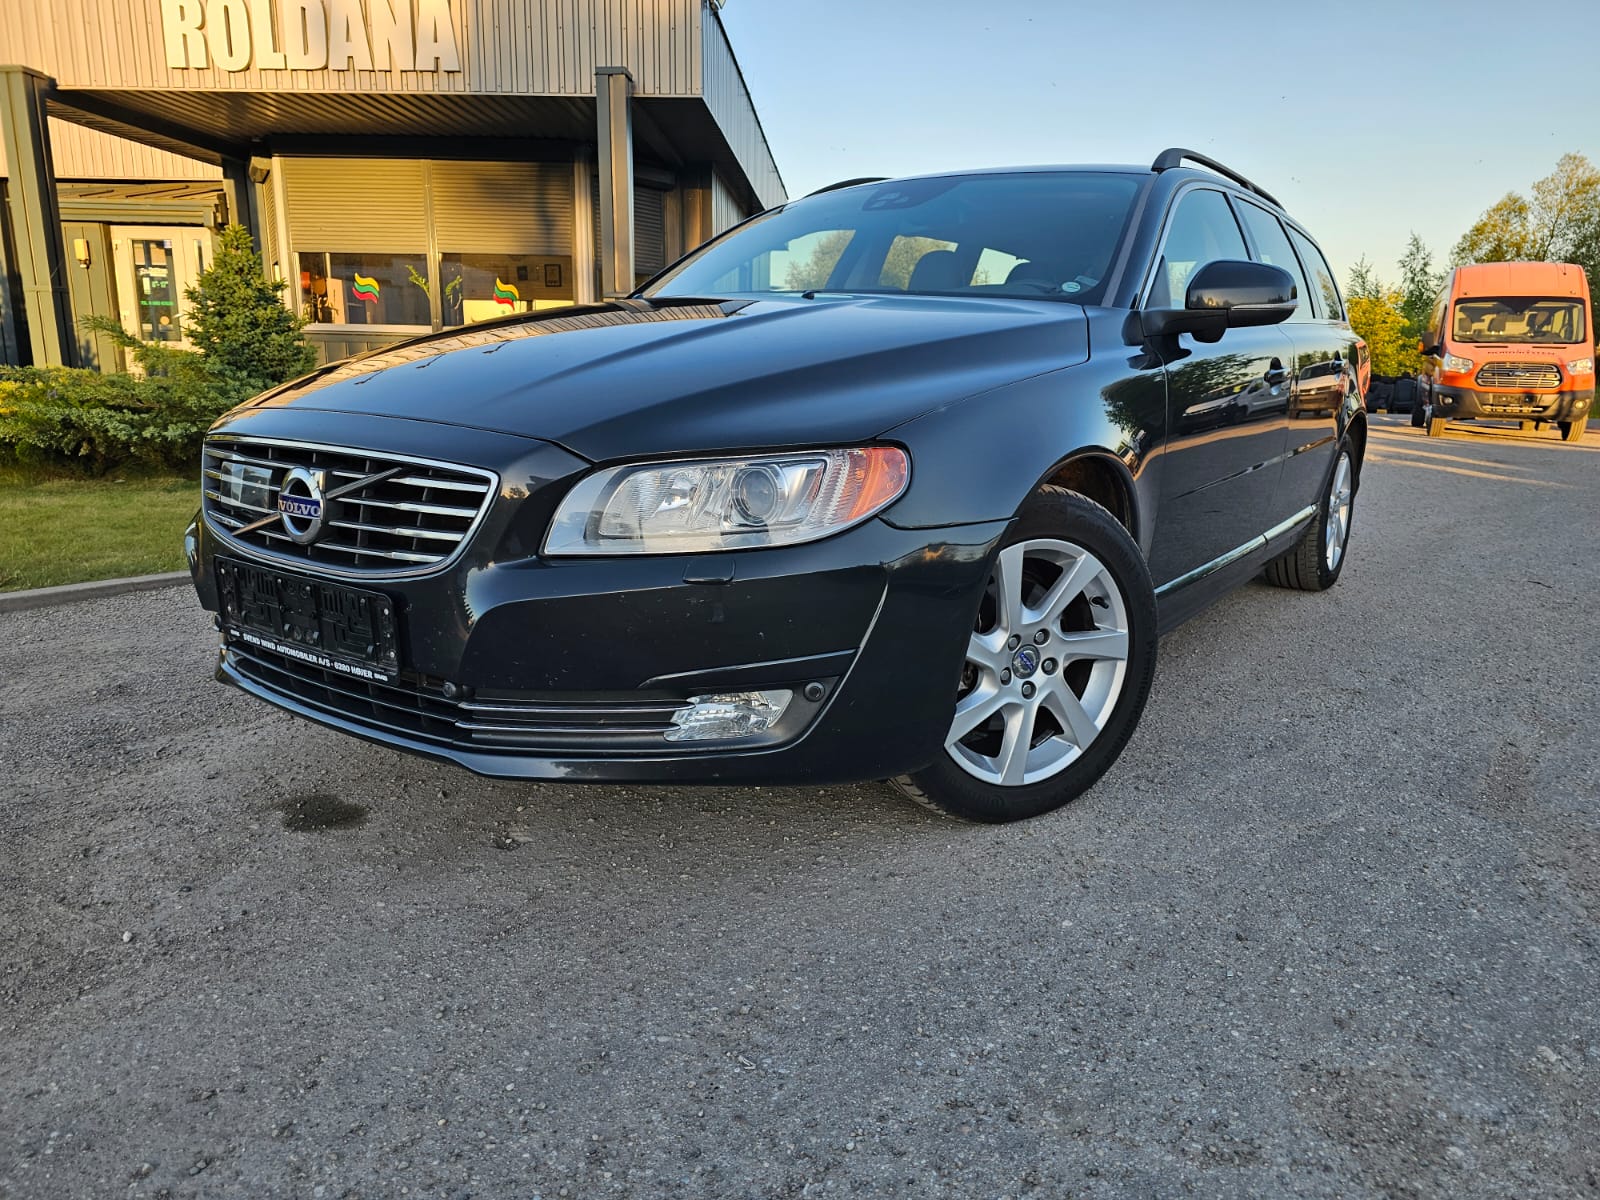 Volvo V70, 2.0 l., universalas, 2014-07/naudoti automobiliai/Roldana